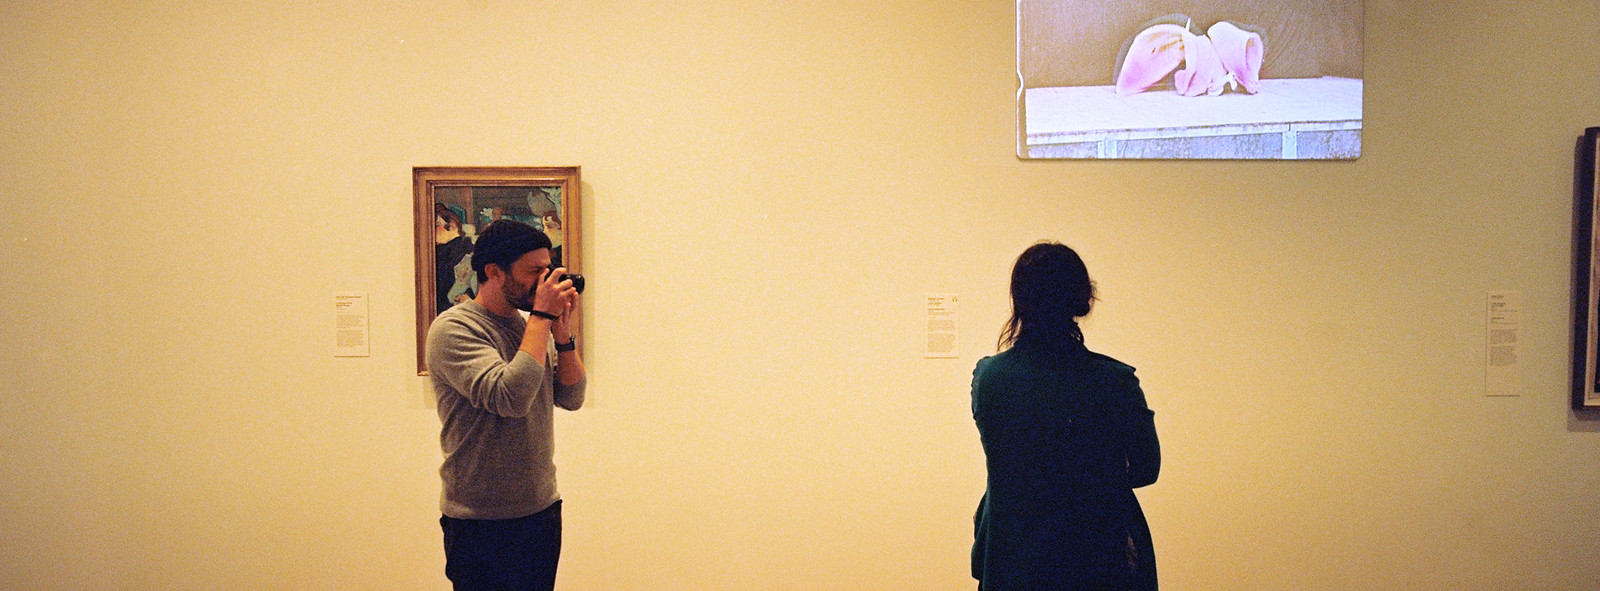 Tim shoots Anna, Anna looks at art.